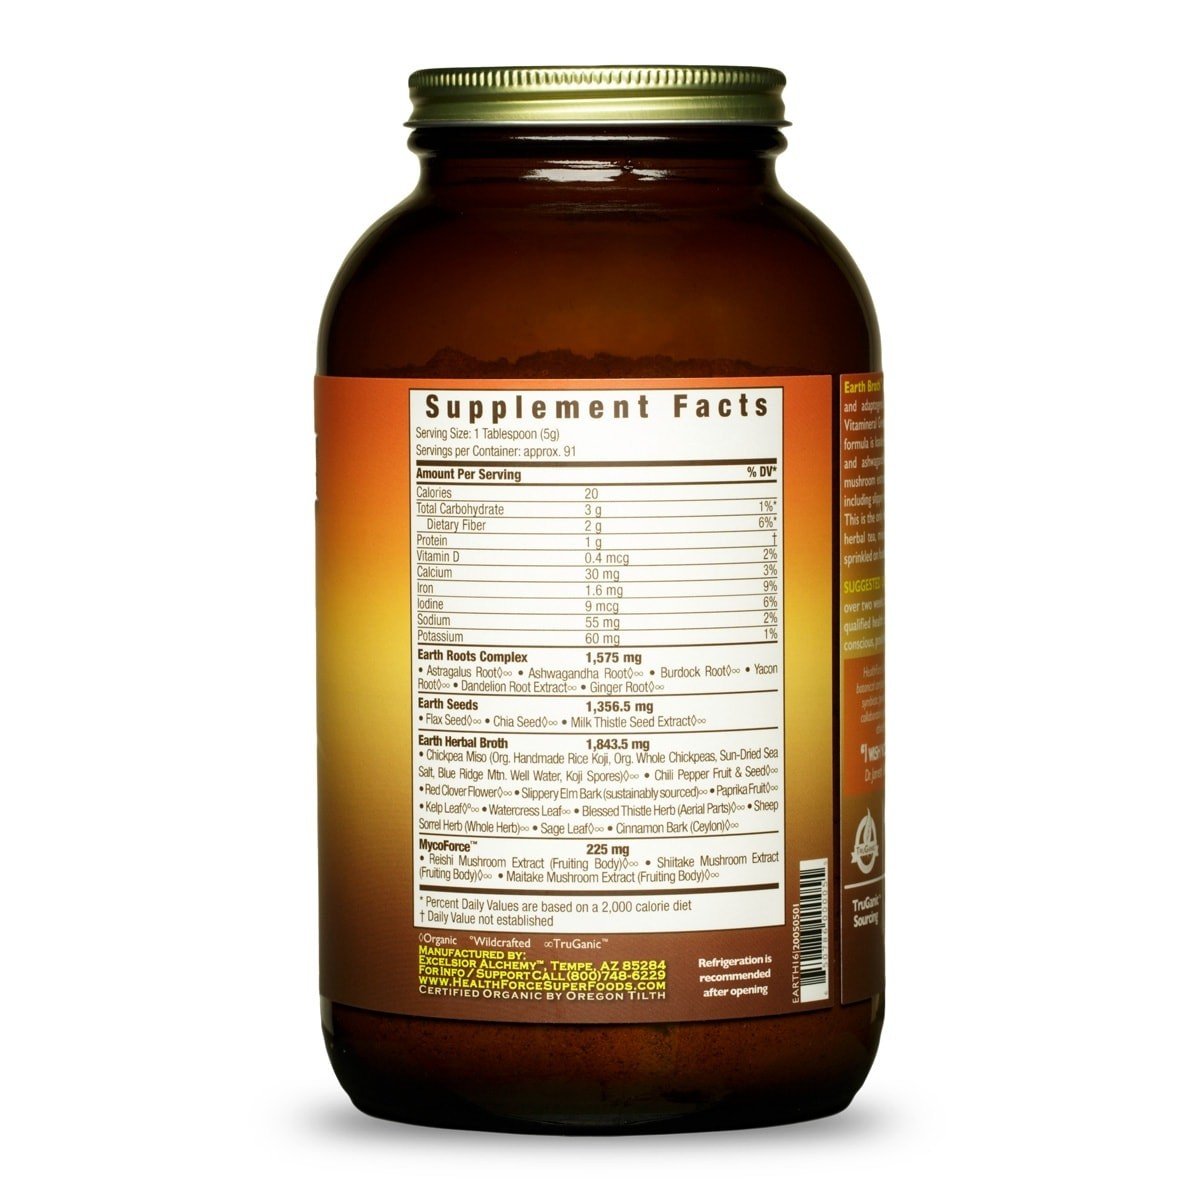 HealthForce Superfoods Vitamineral Earth 16 oz Powder